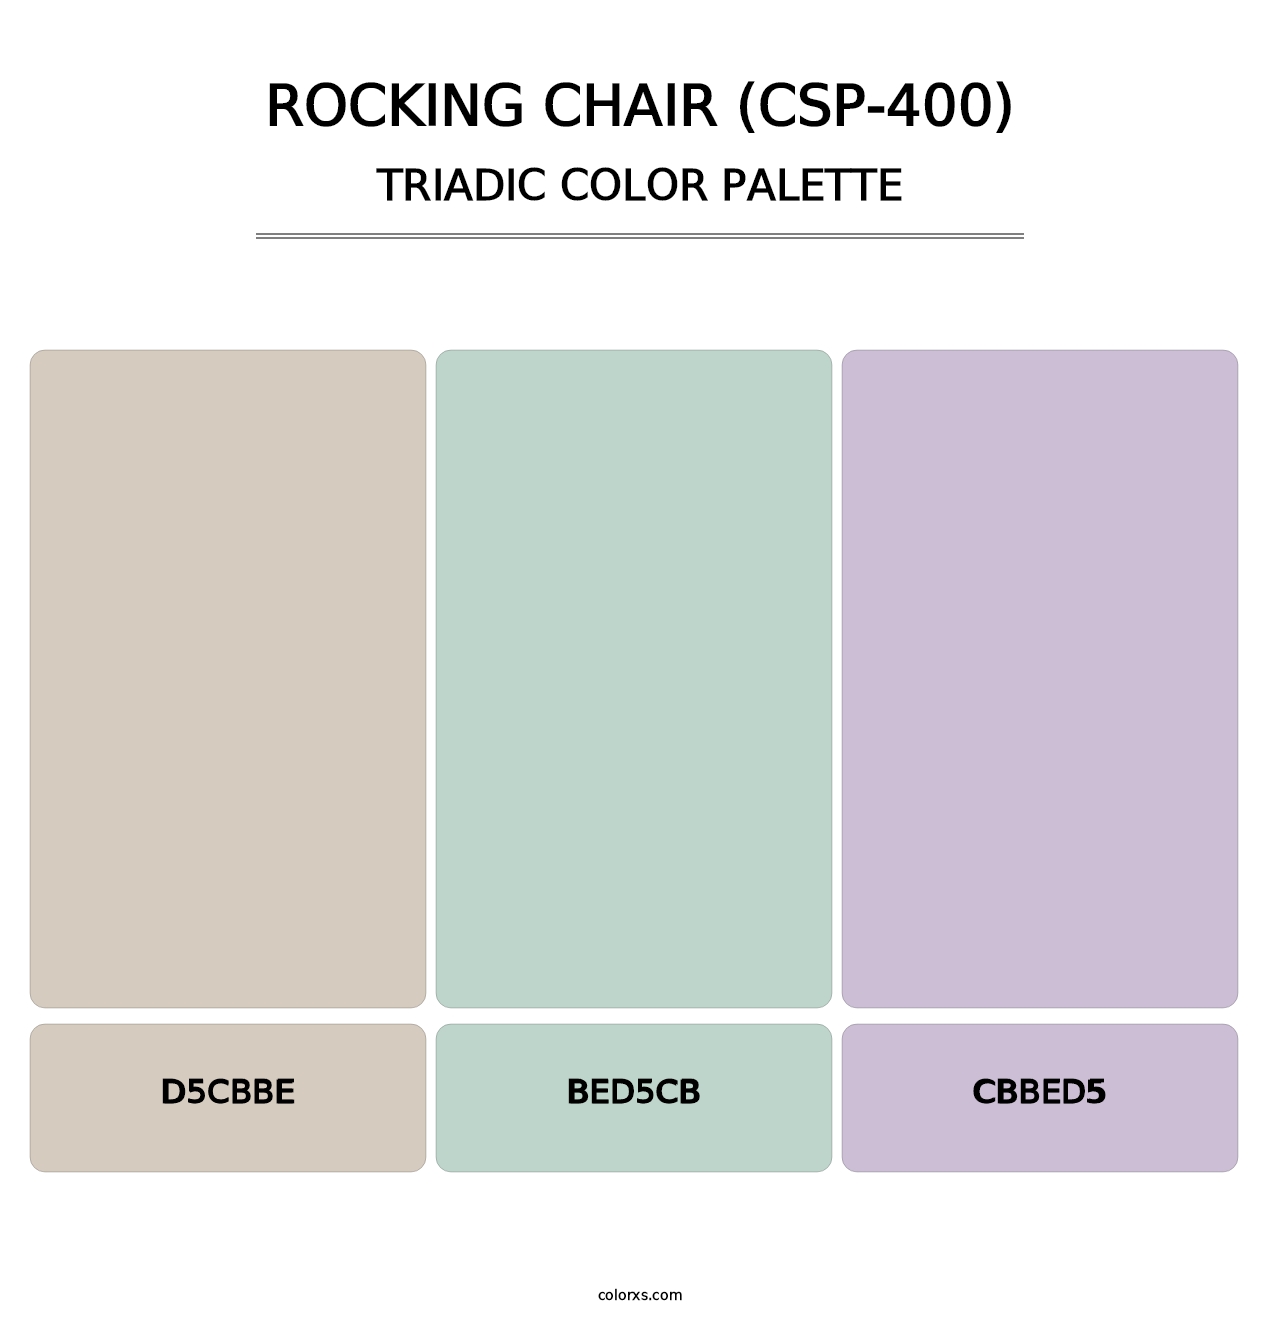 Rocking Chair (CSP-400) - Triadic Color Palette